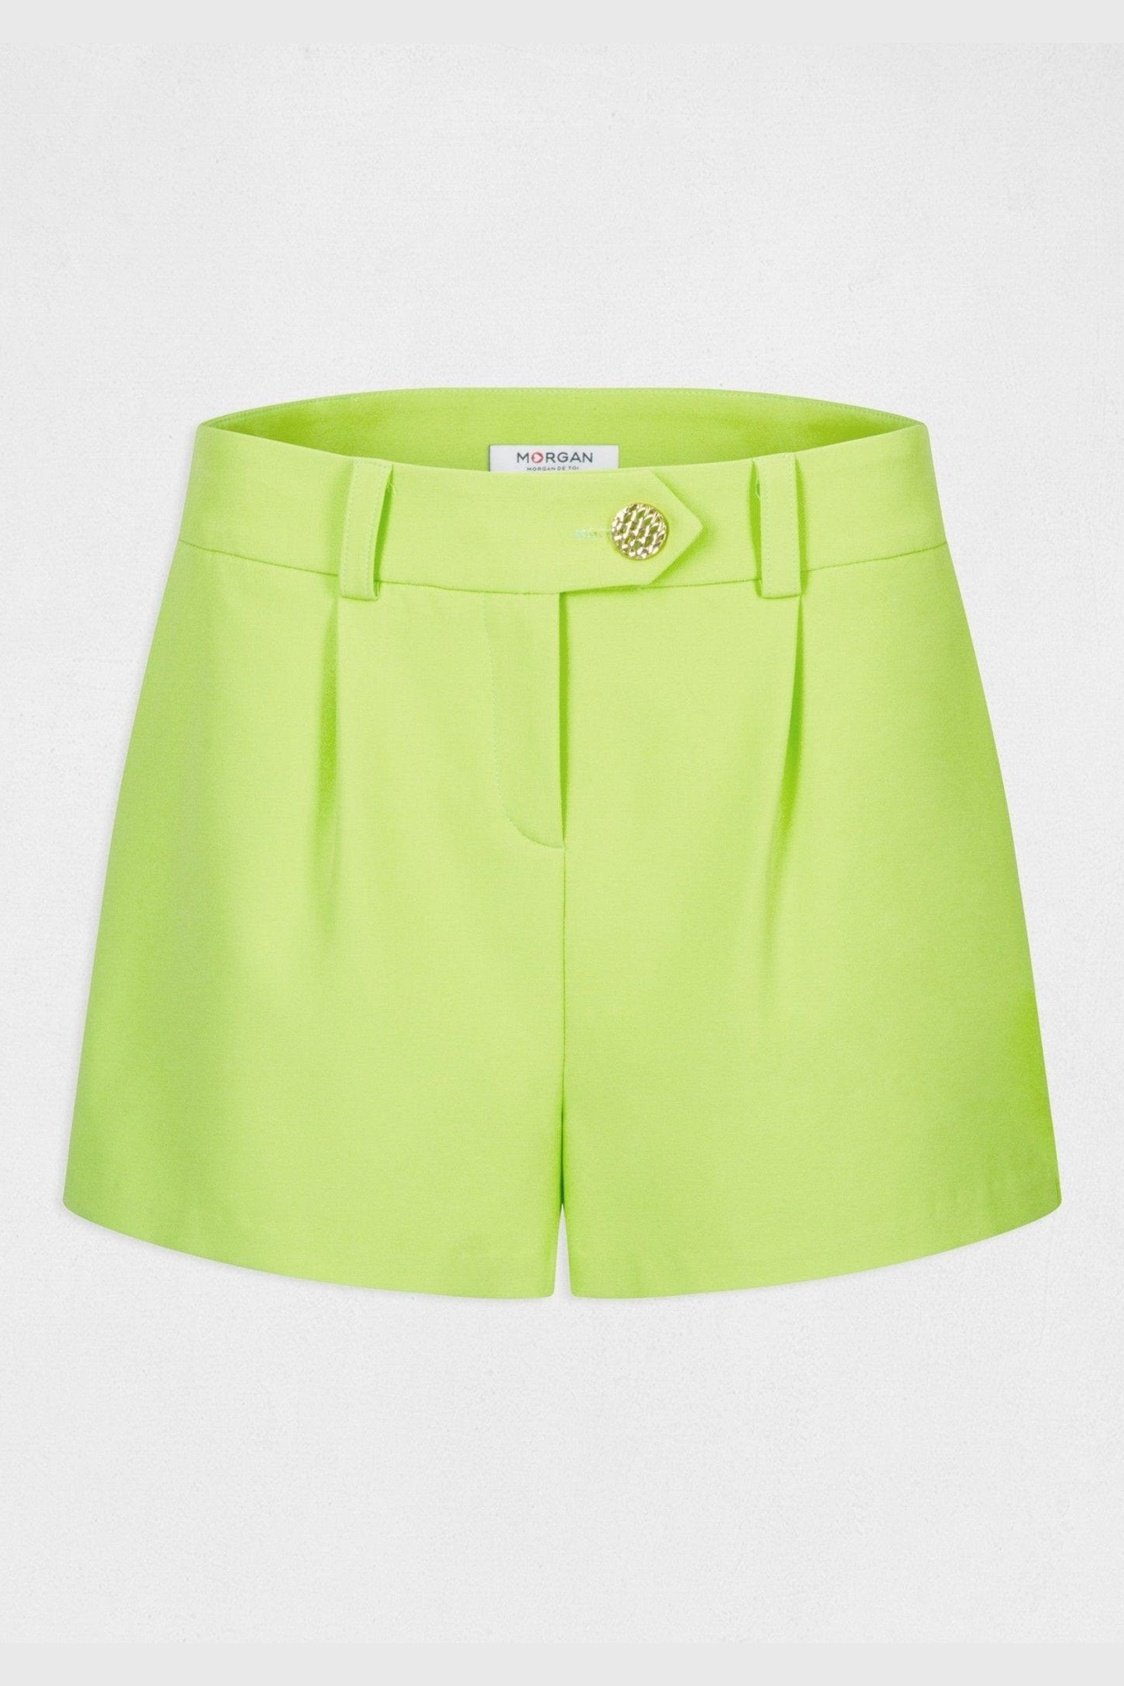 MORGAN - מכנסי אלגנט קצרים בצבע ירוק - MASHBIR//365